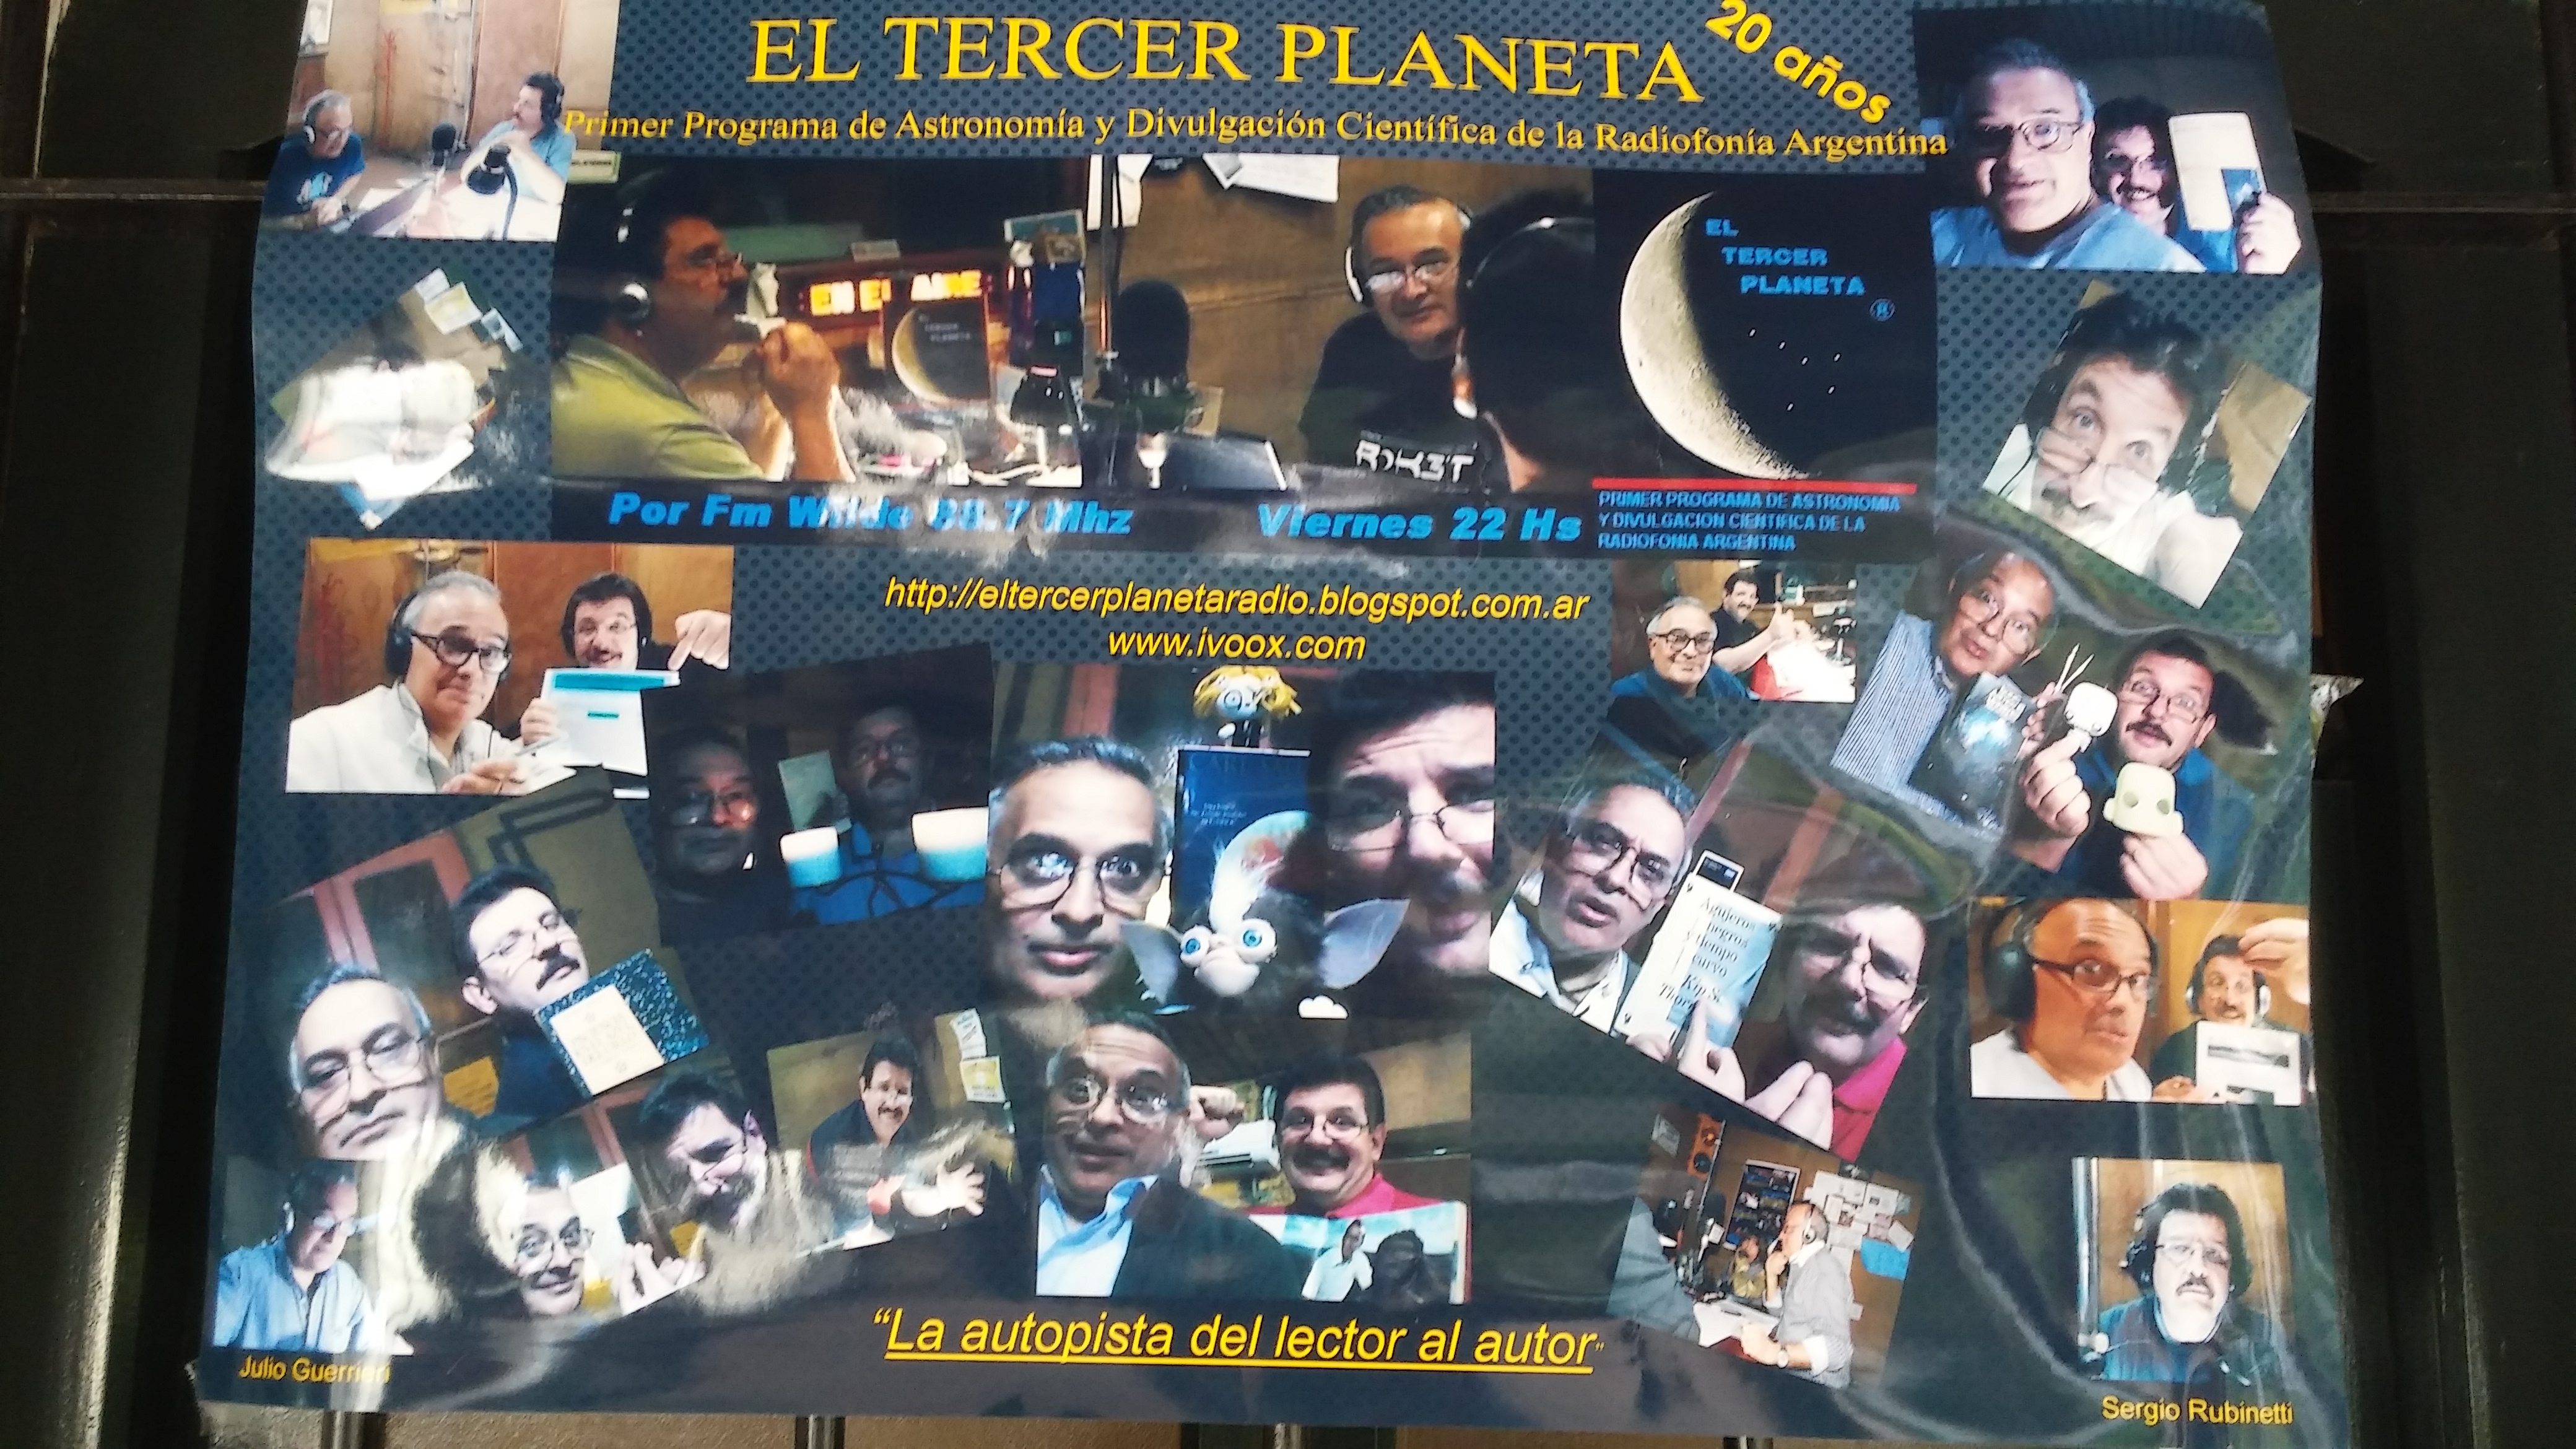 El Tercer Planeta Radio